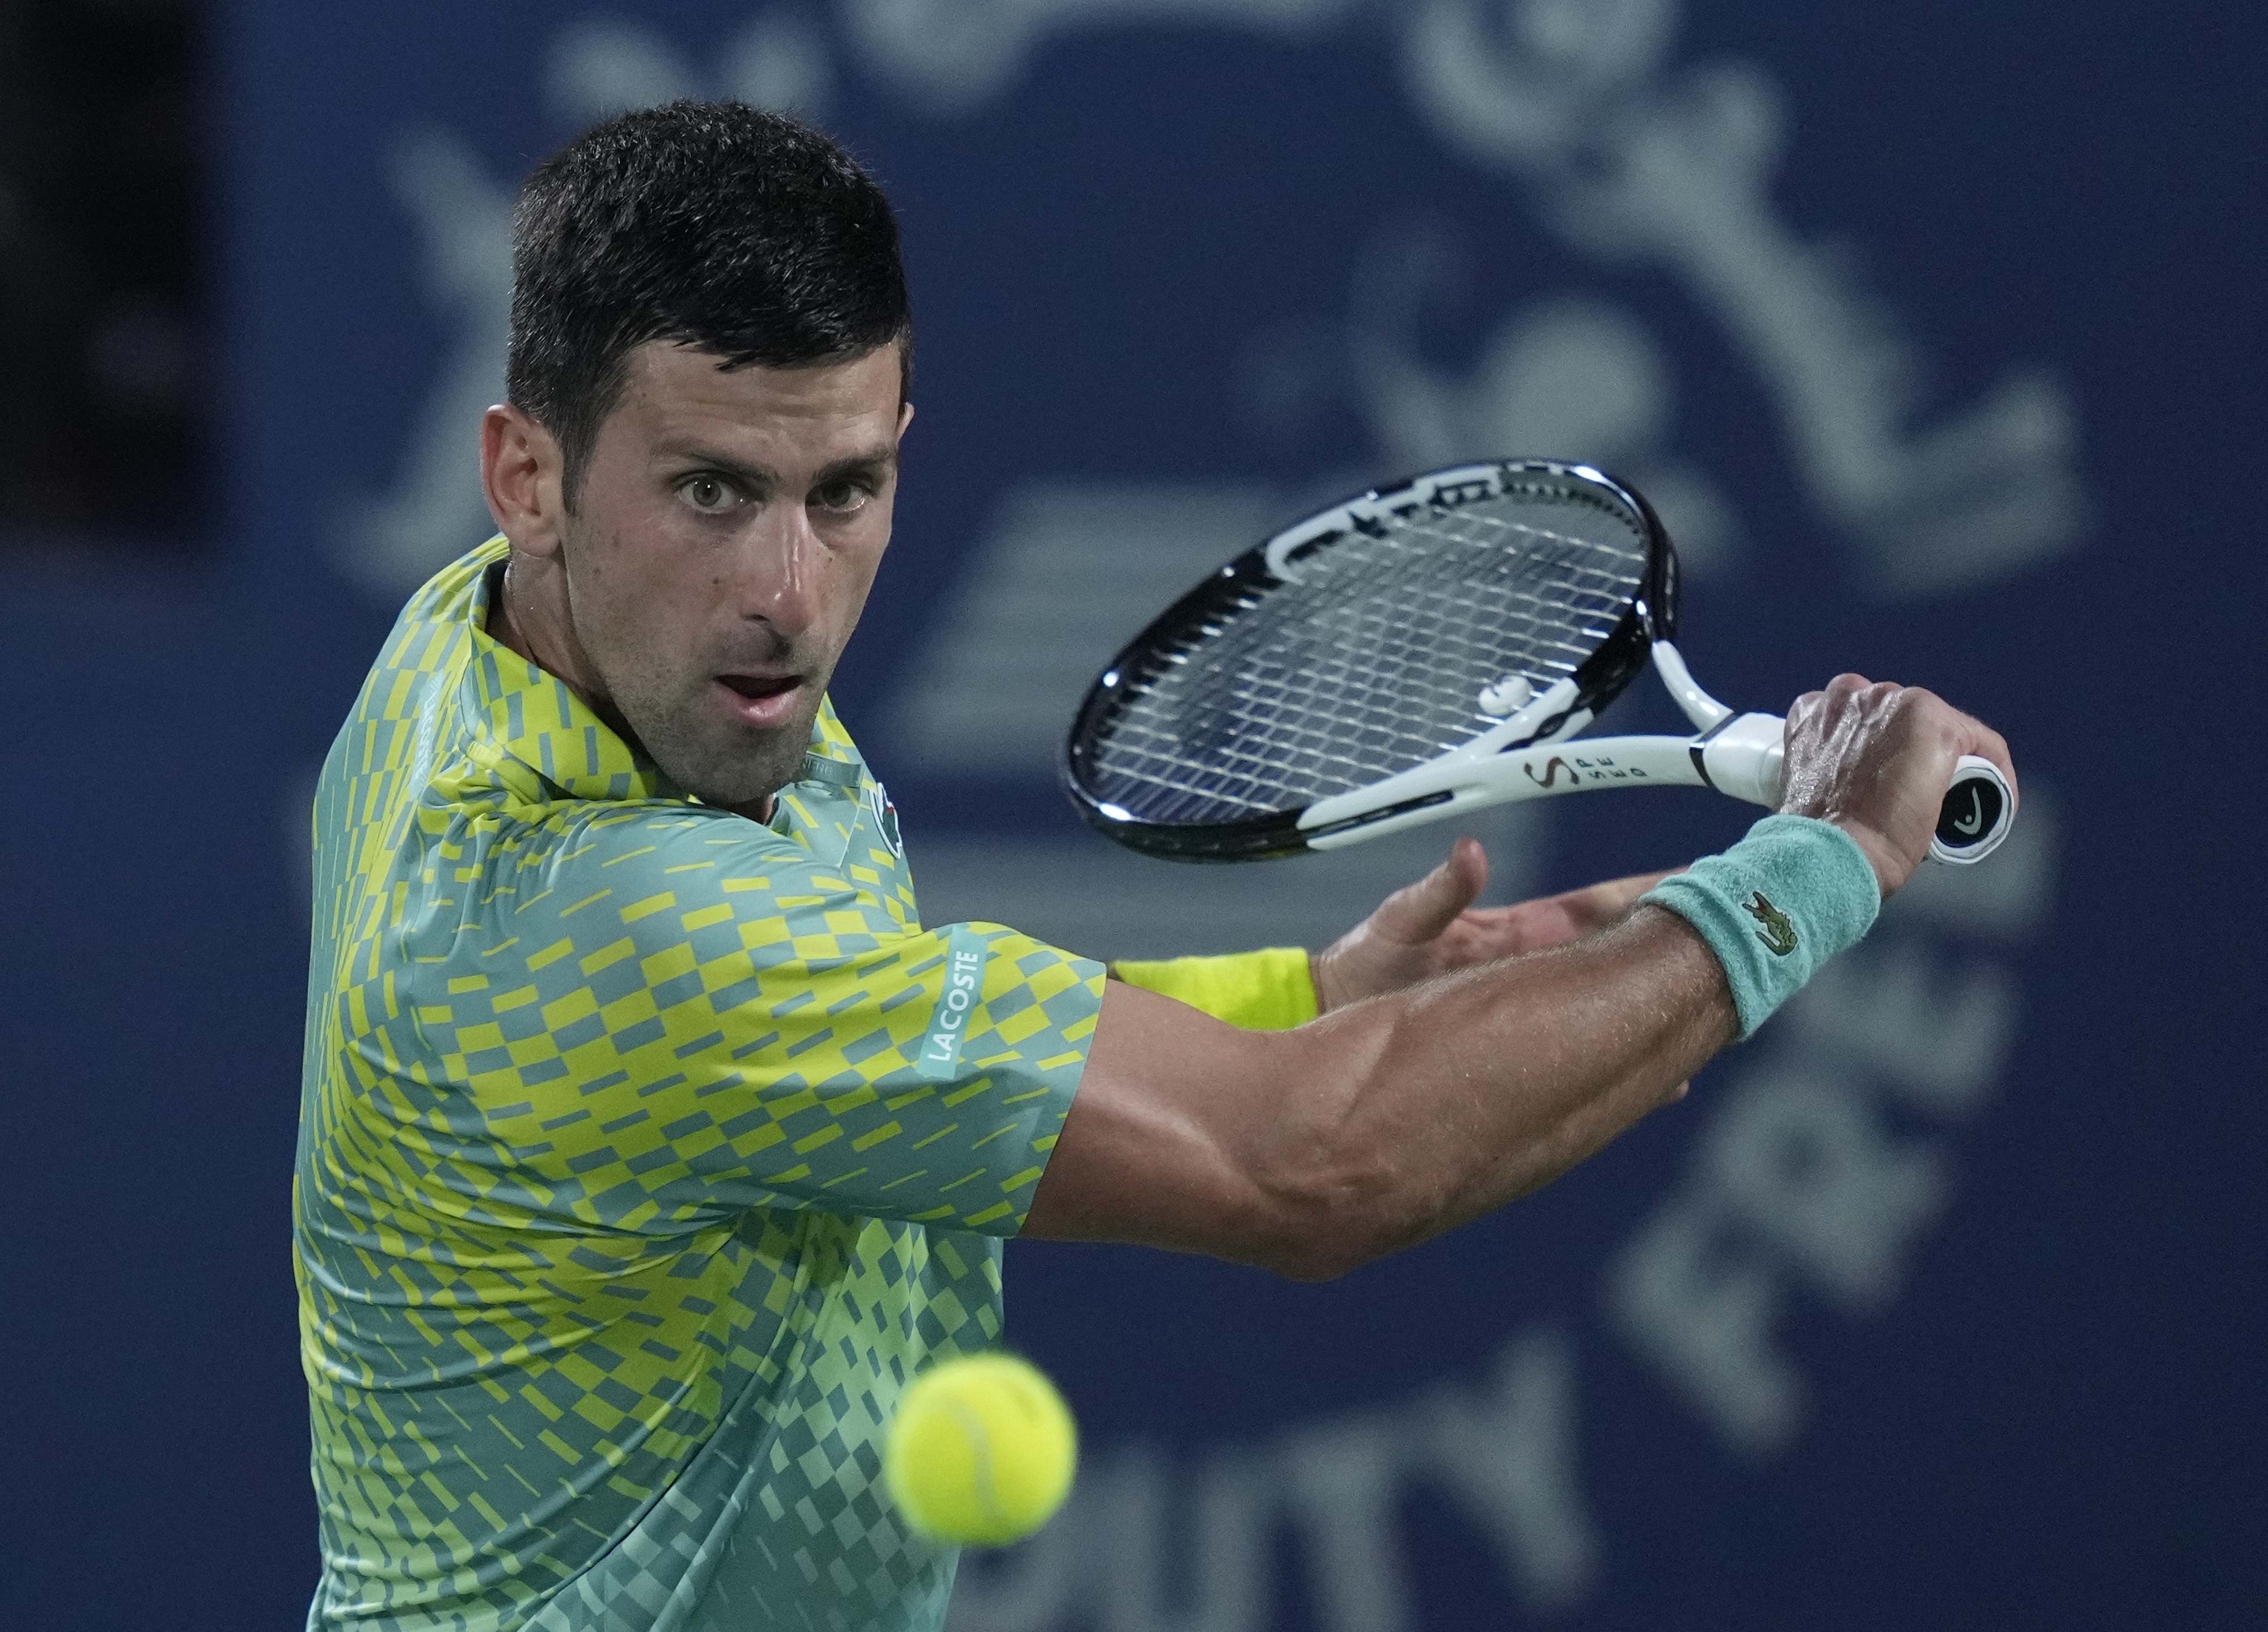 DeSantis floats an idea to let Novak Djokovic play in Miami Open